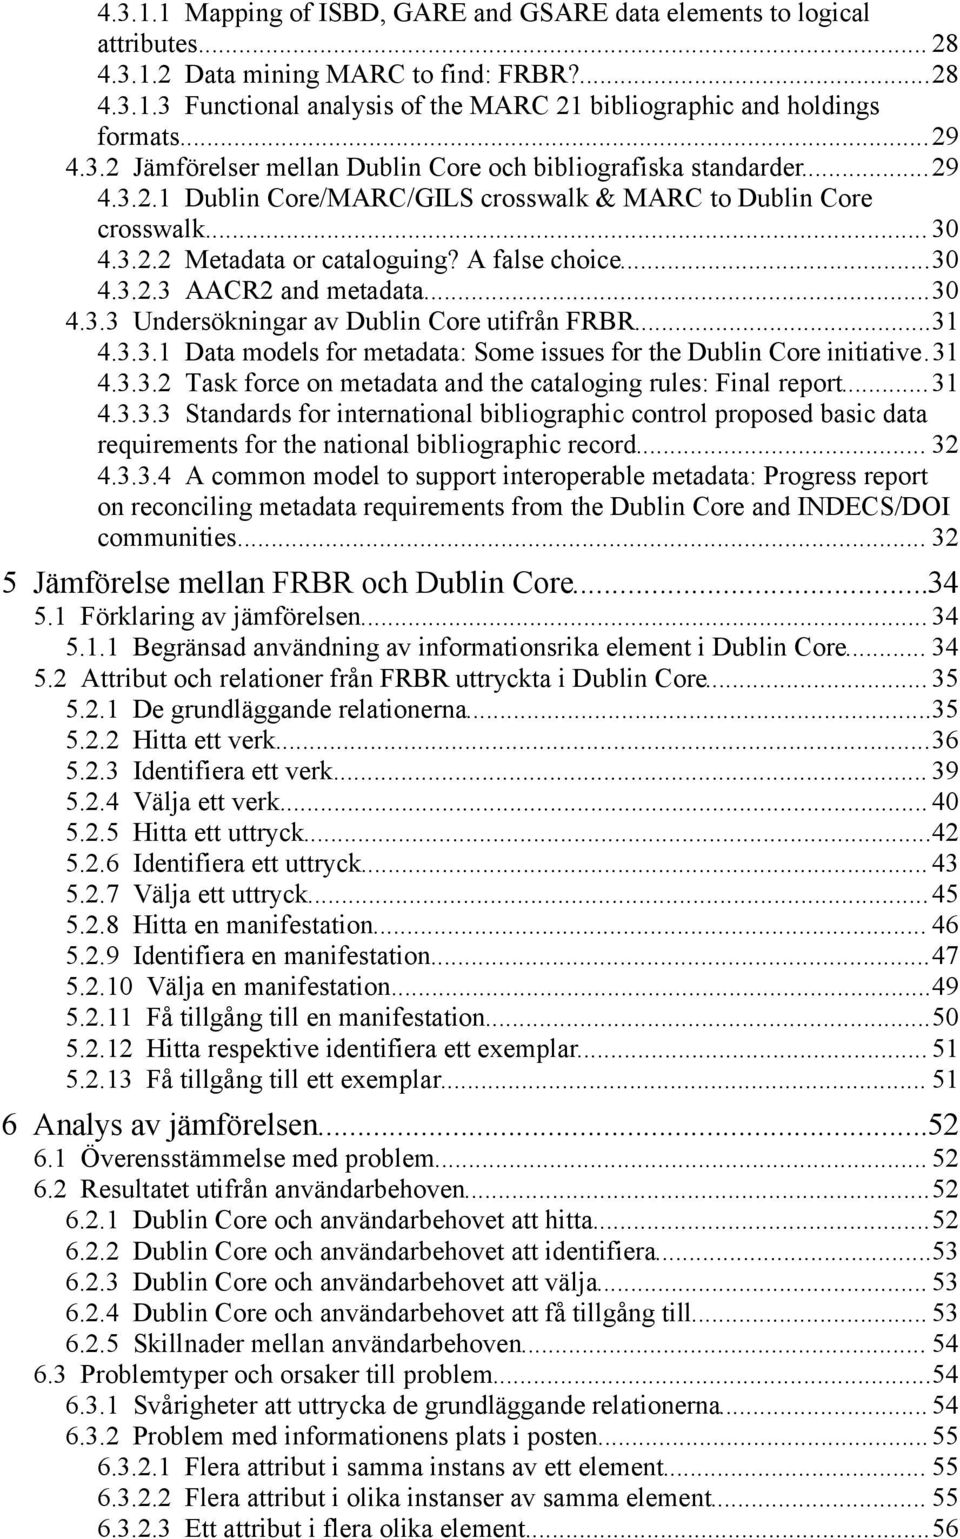 A false choice...30 4.3.2.3 AACR2 and metadata...30 4.3.3 Undersökningar av Dublin Core utifrån FRBR...31 4.3.3.1 Data models for metadata: Some issues for the Dublin Core initiative.31 4.3.3.2 Task force on metadata and the cataloging rules: Final report.